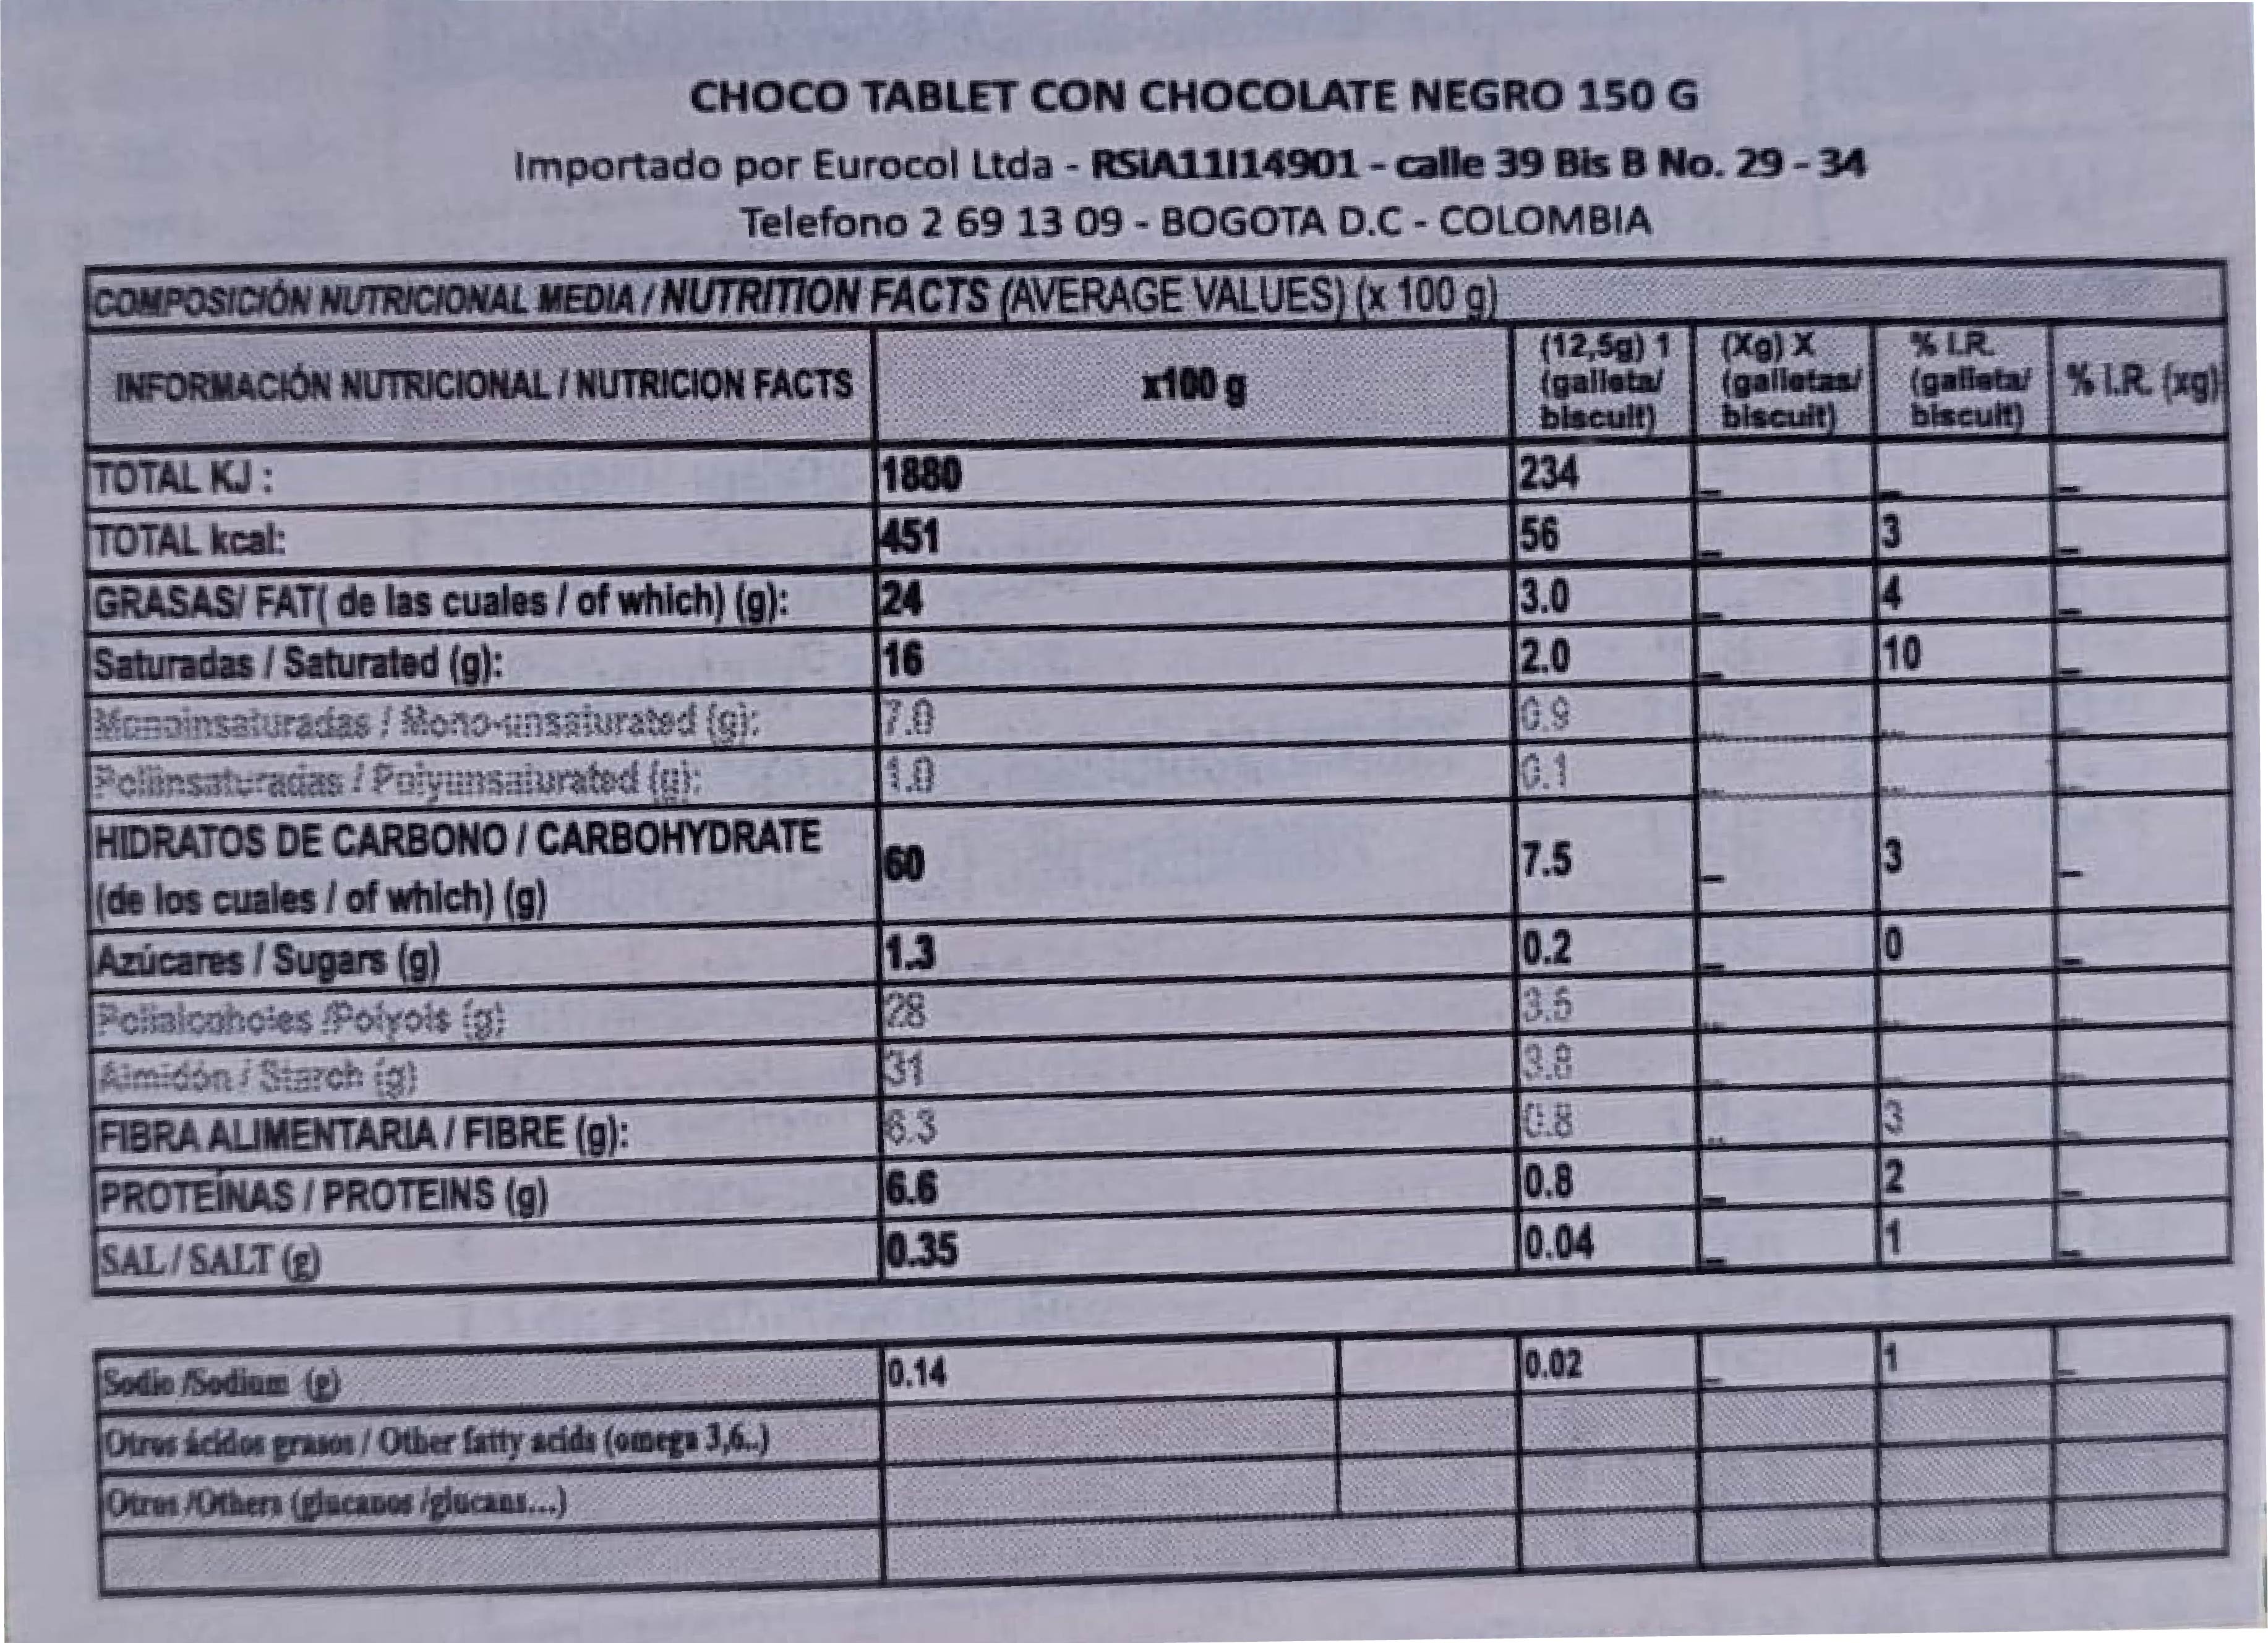 Galleta Choco Tablet con Chocolate Negro 150gr (GULLON)